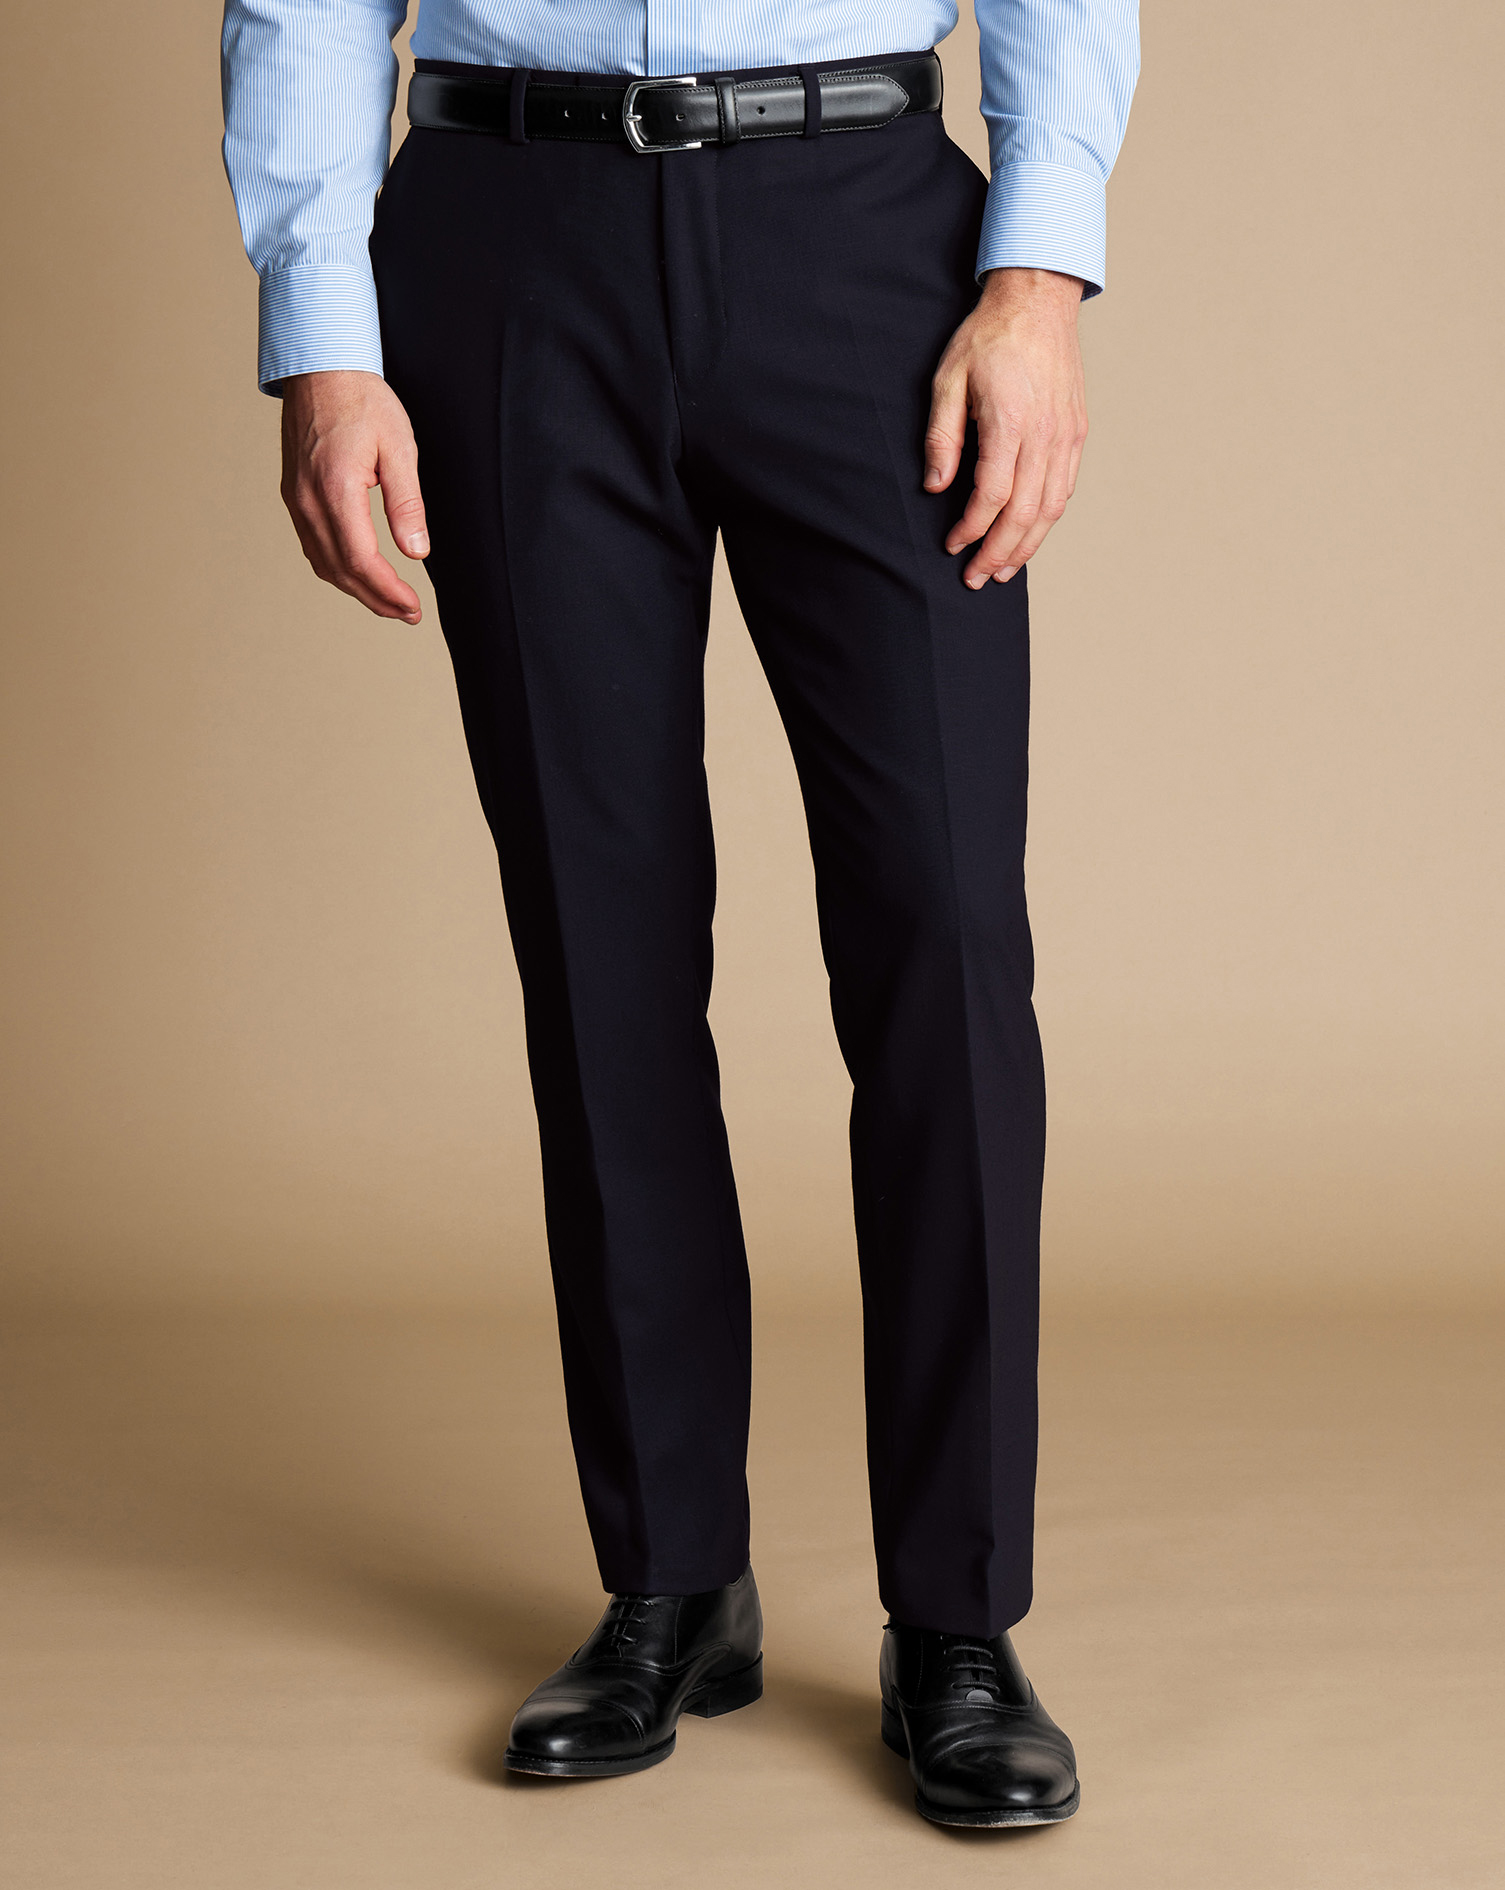 Men's Charles Tyrwhitt Ultimate Performance Suit Trousers - Dark Navy Blue Size 36/34 Wool
